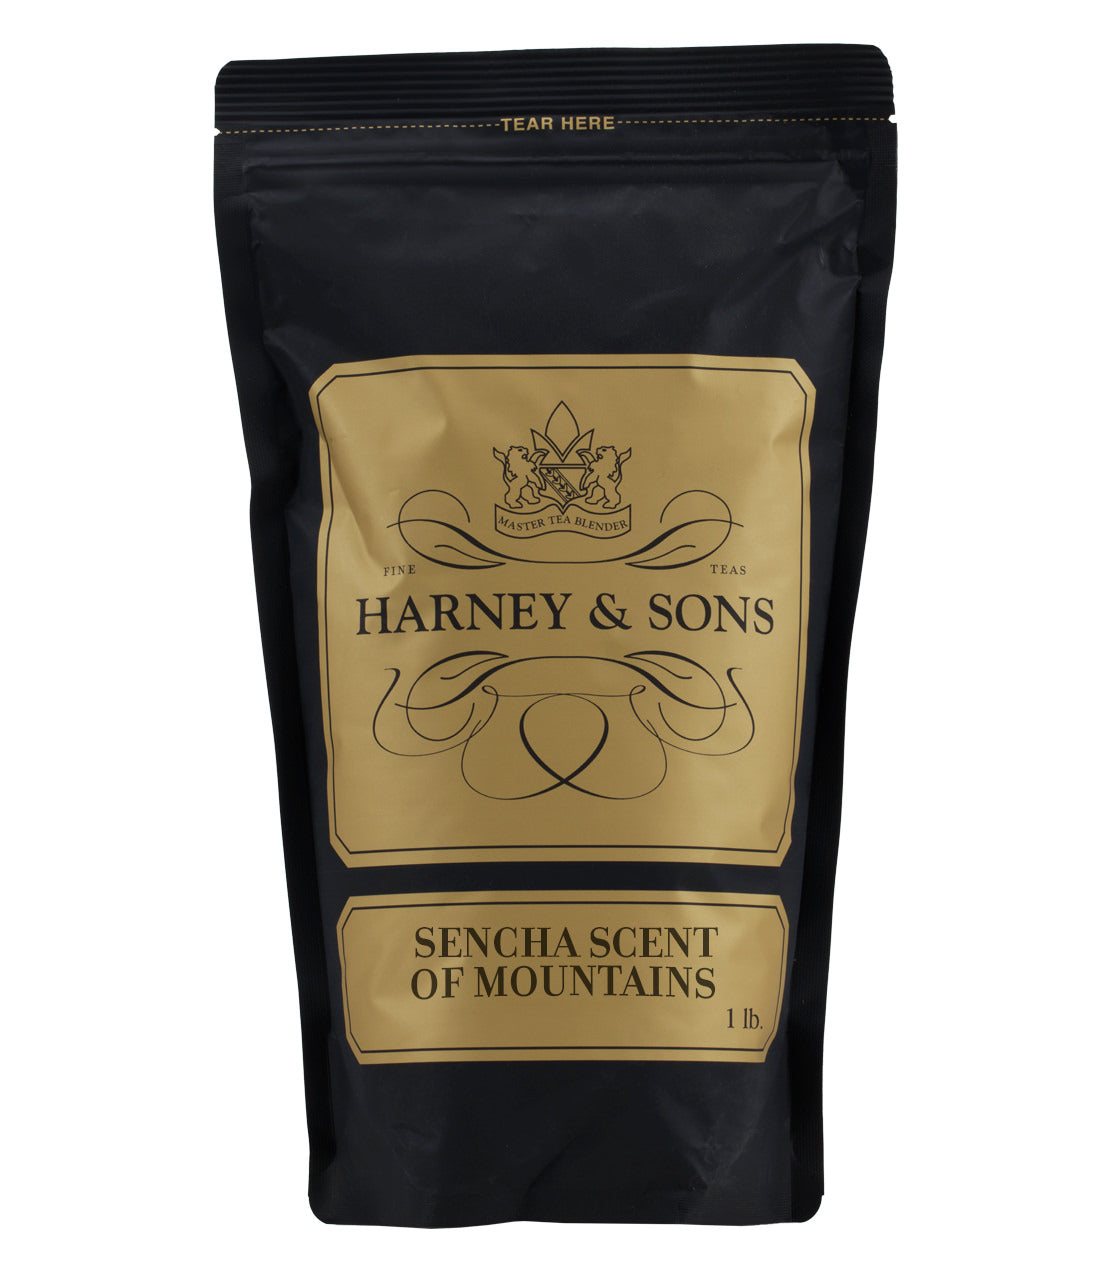 Sencha Scent of Mountains - Loose 1 lb. Bag - Harney & Sons Fine Teas